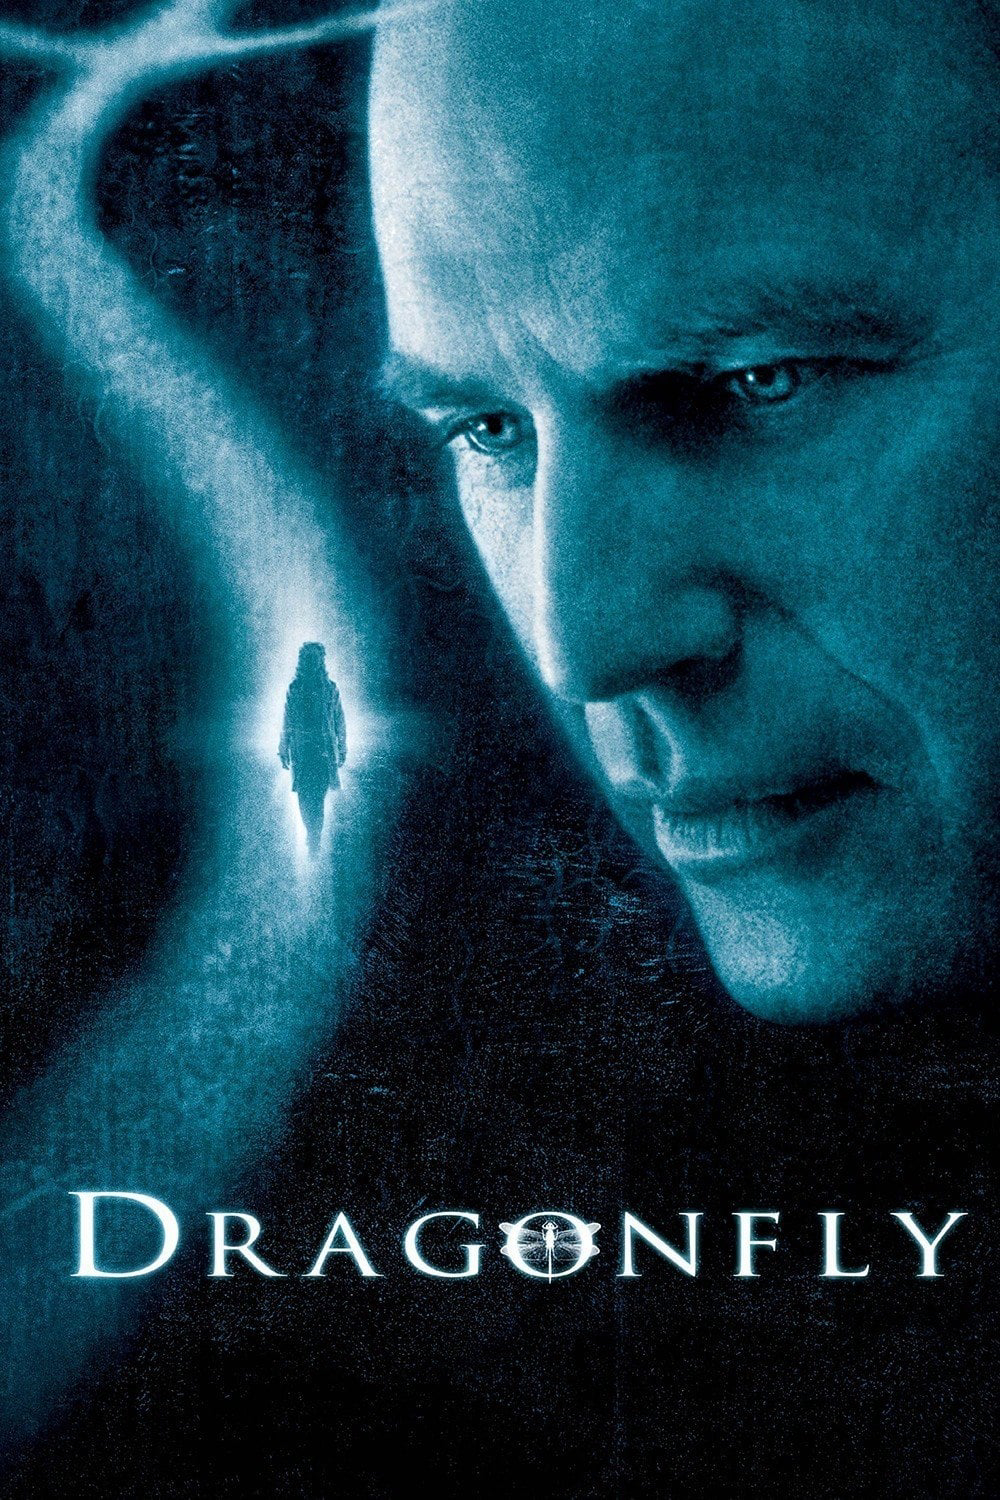 Poster Phim Mật Hiệu Chuồn Chuồn (Dragonfly)